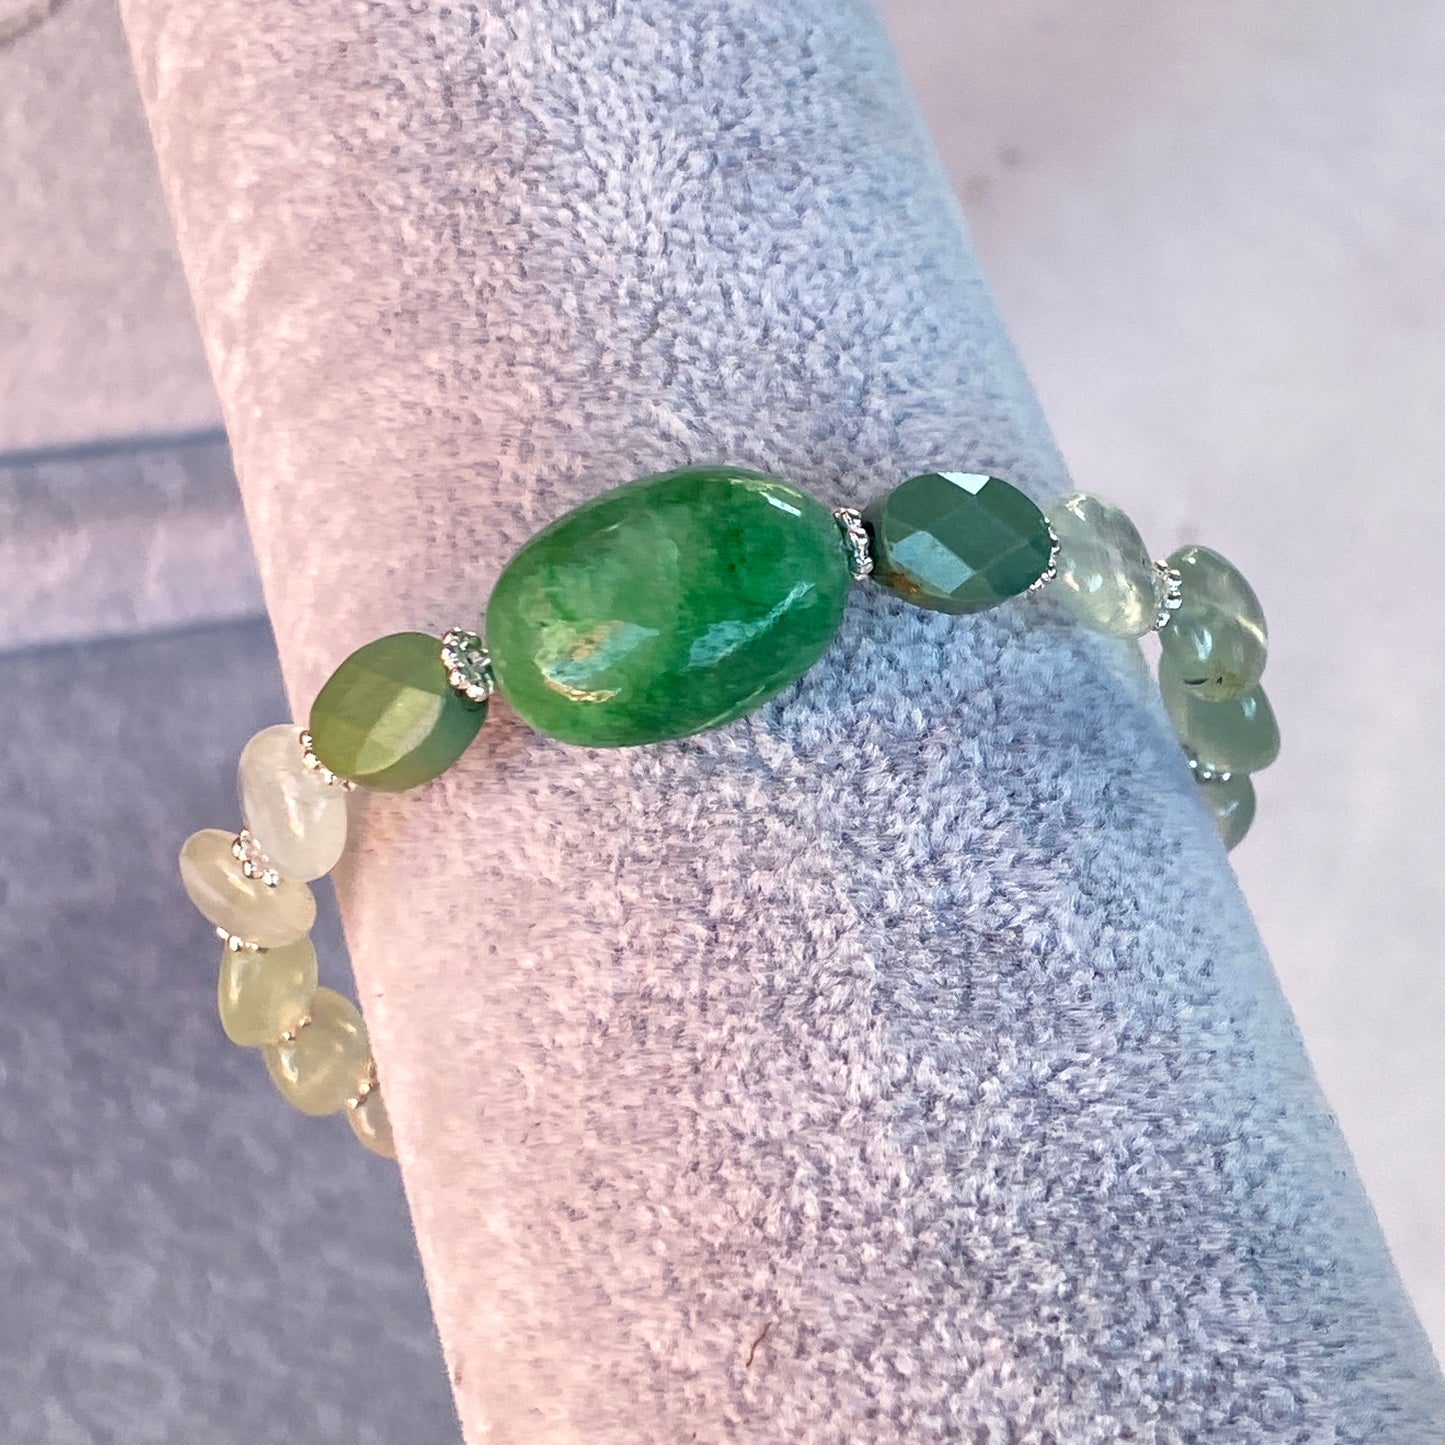 Green Emerald, Green Turquoise, and Prehnite gemstone Bracelet